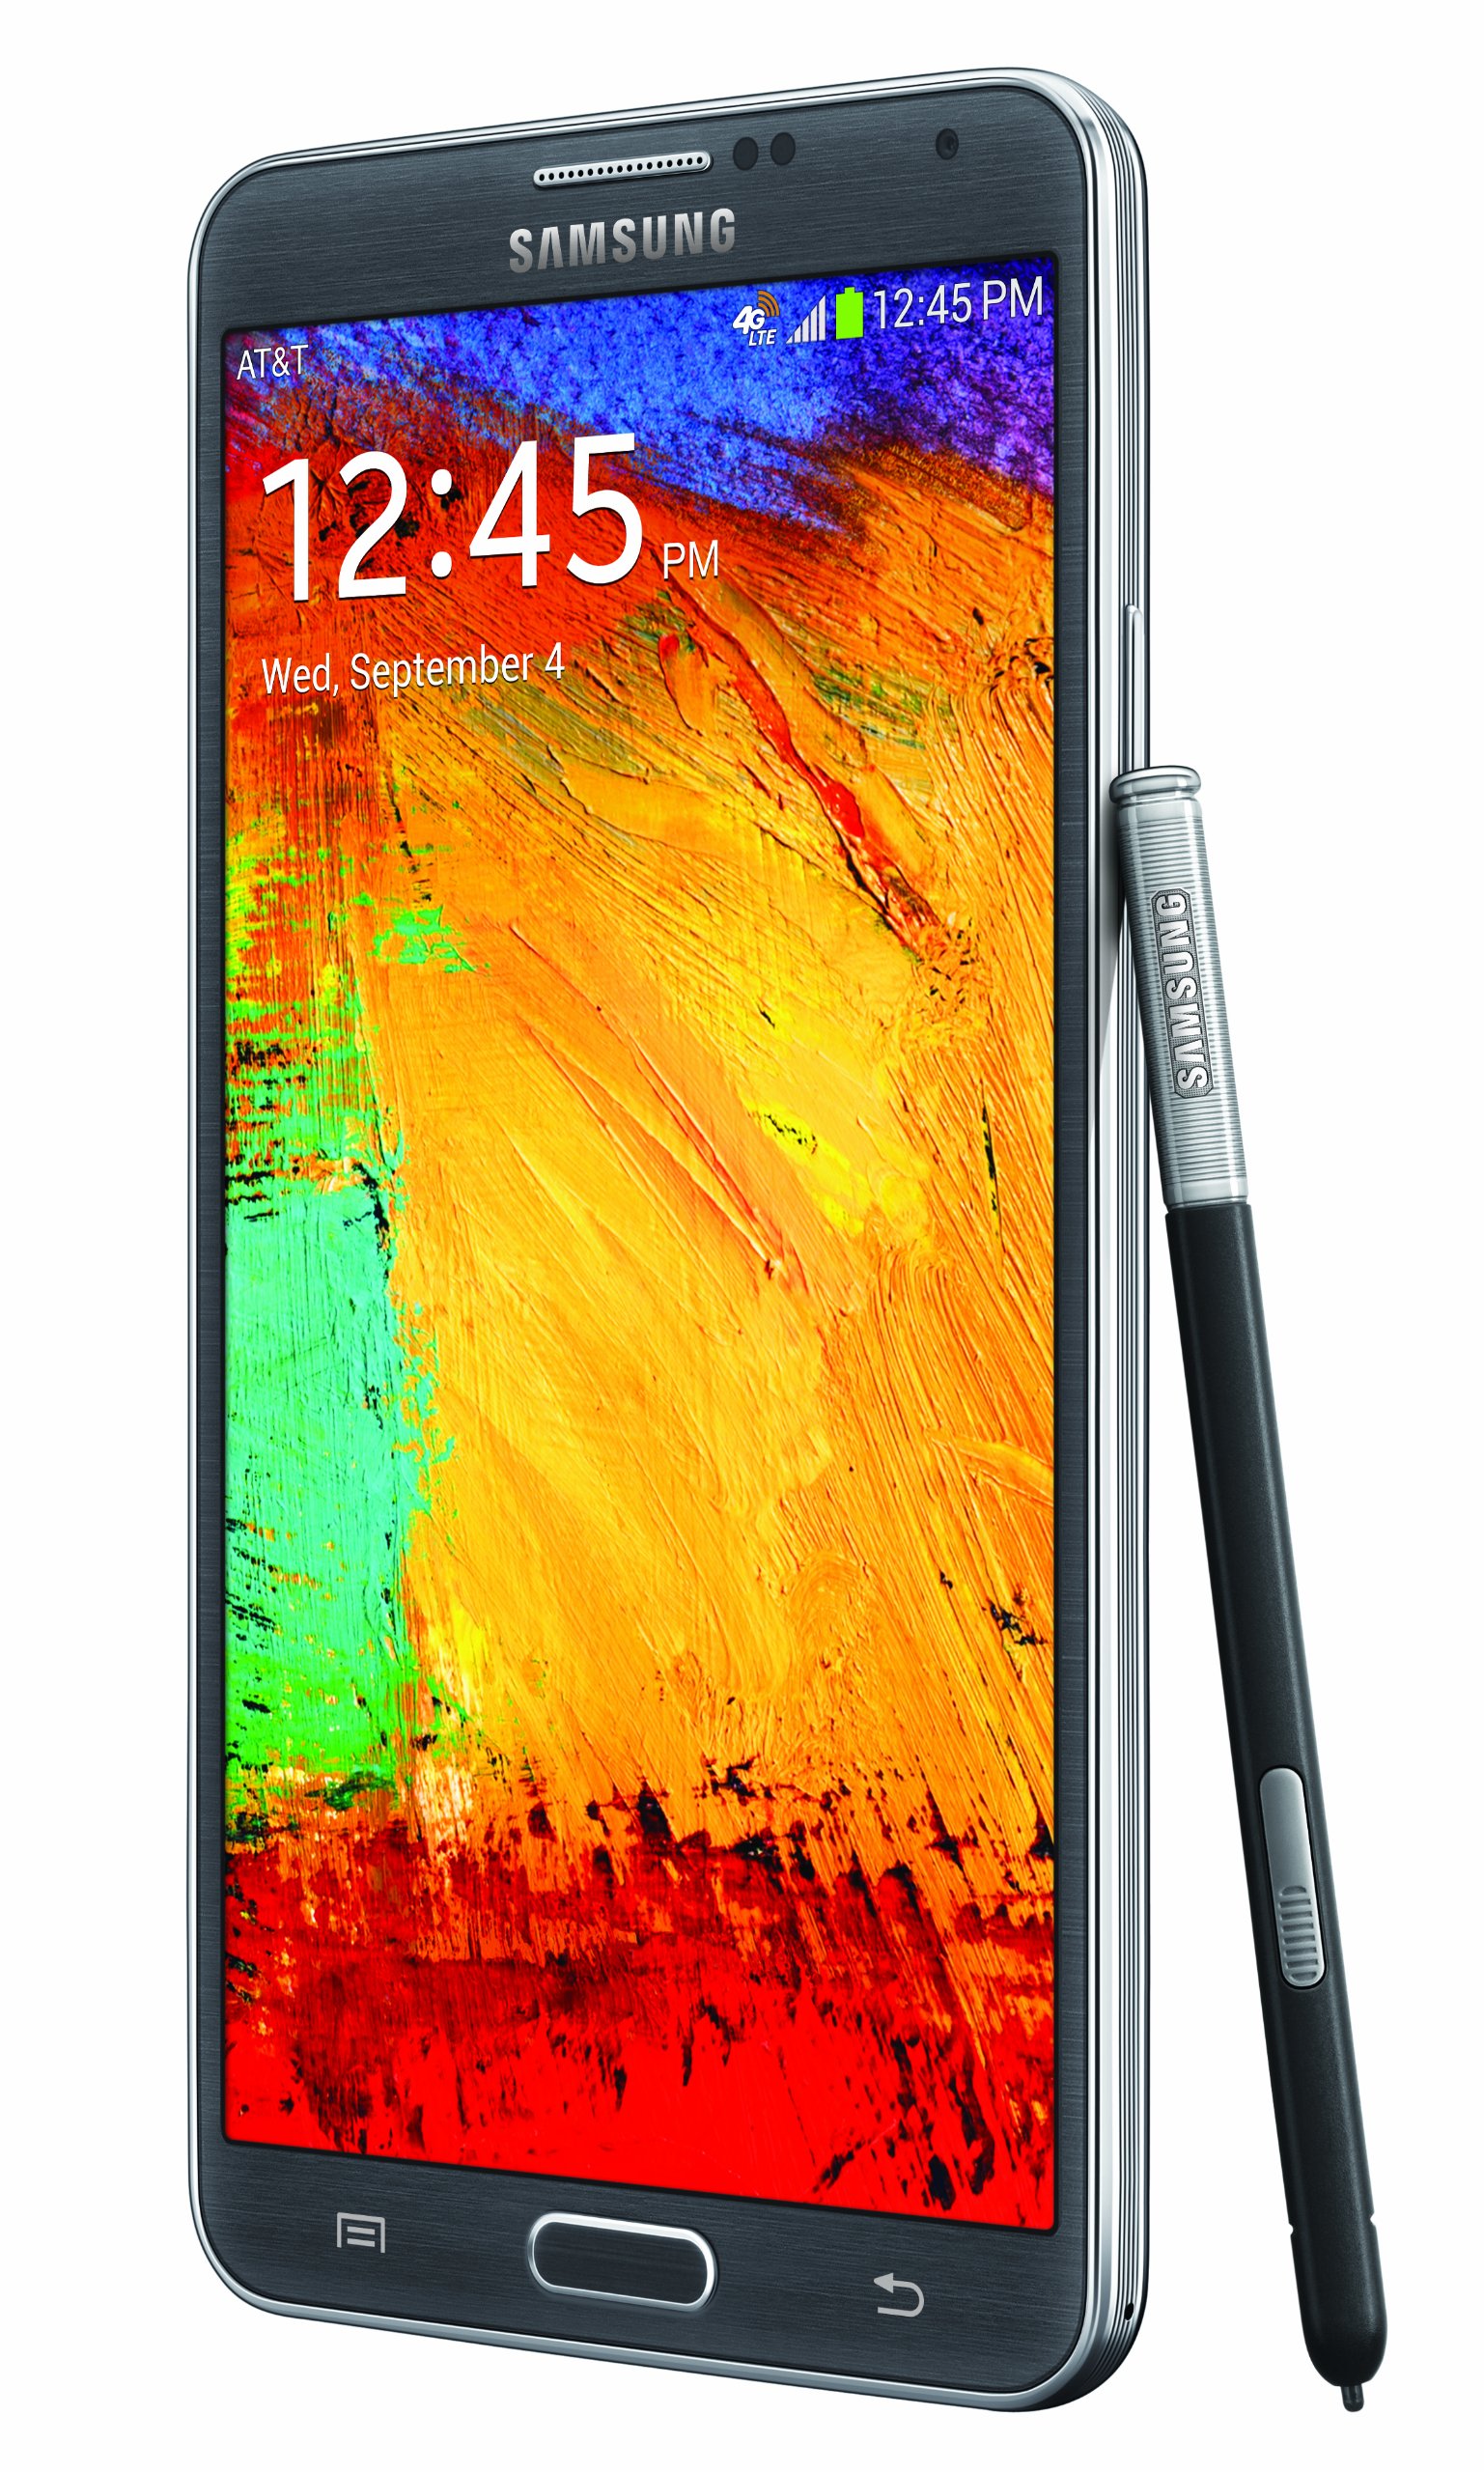 Samsung Galaxy Note 3, Black 32GB (AT&T)